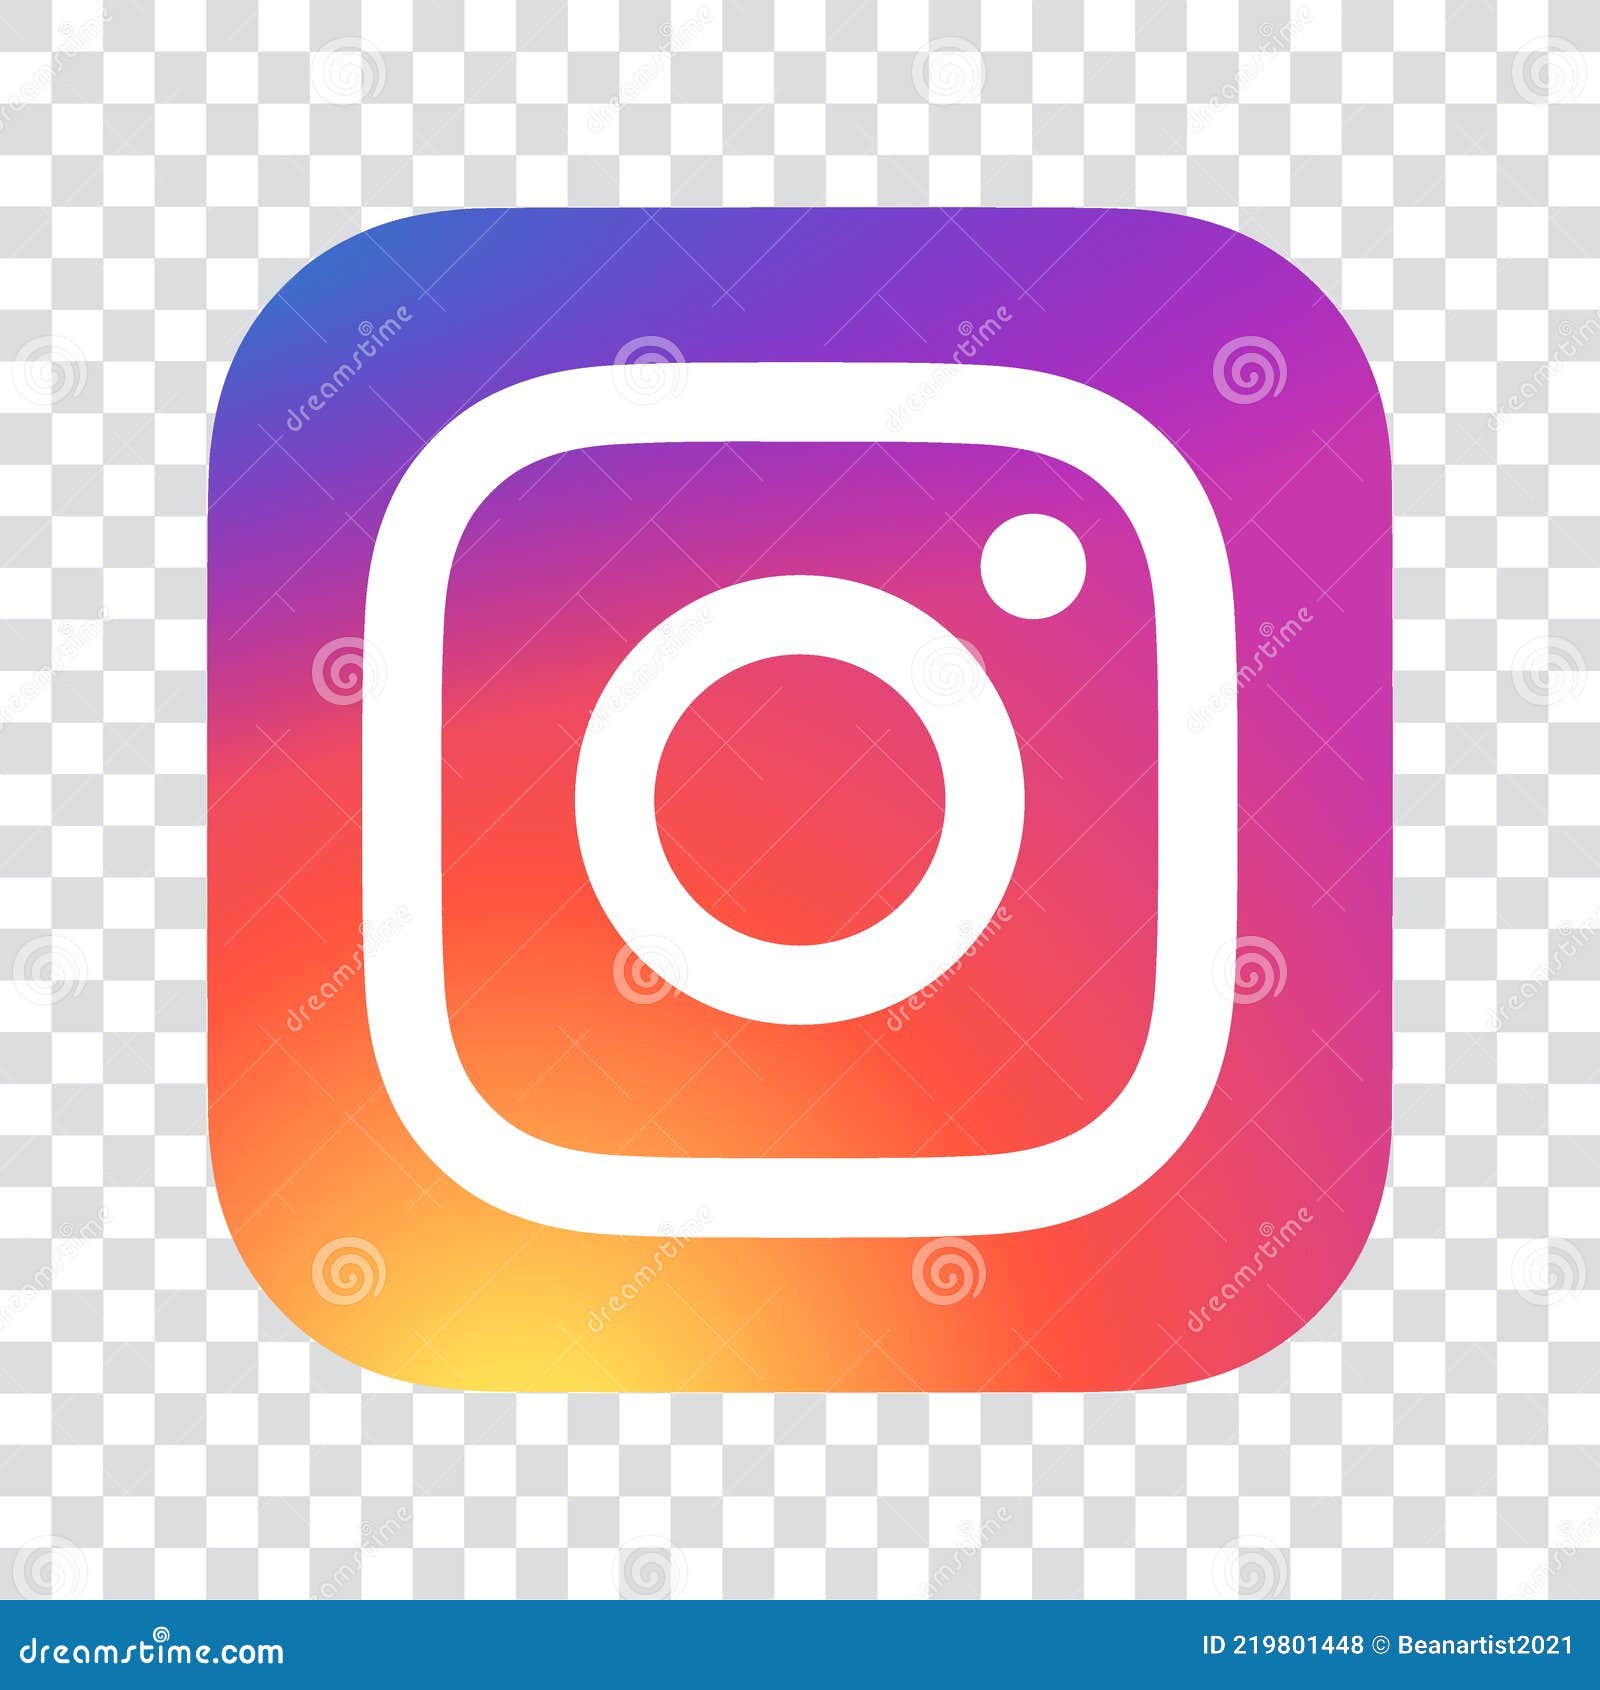 Instagram icon logo vector editorial stock photo. Illustration of